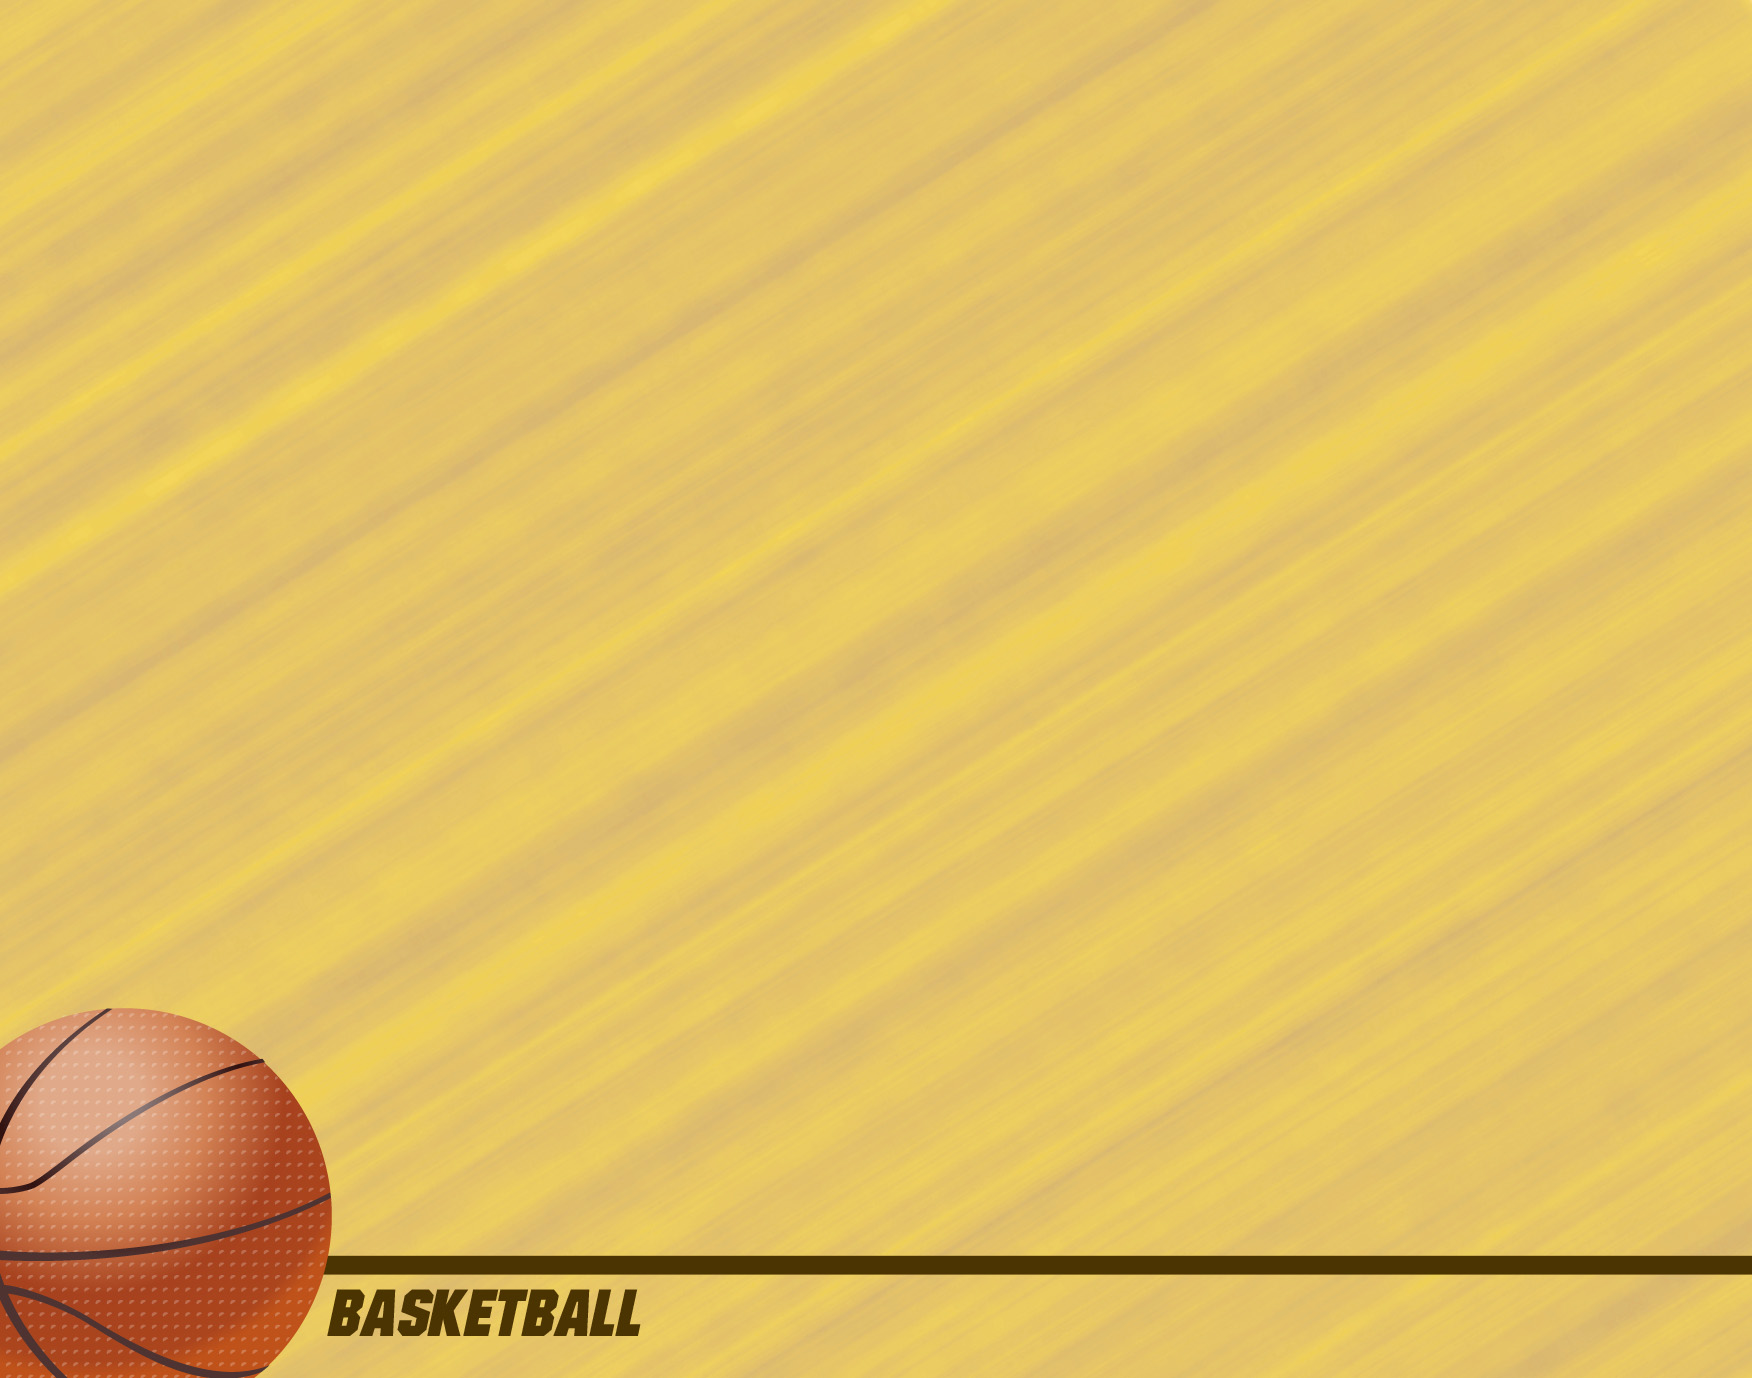 Basketball Background For Photoshop Related Keywords